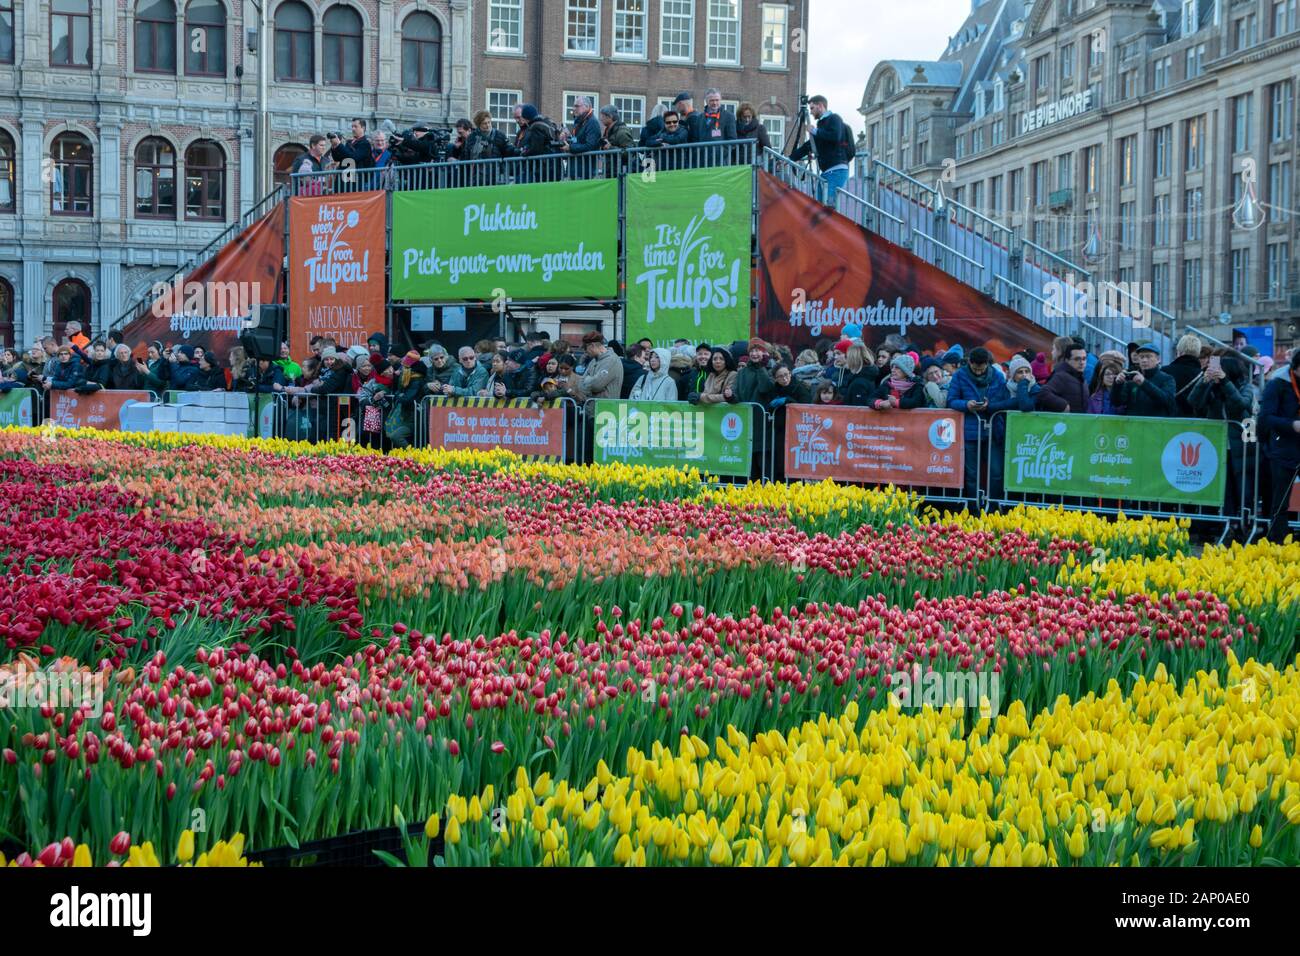 Watching Bridge At Tulip Day At Amsterdam The Netherlands 2020 Stock Photo